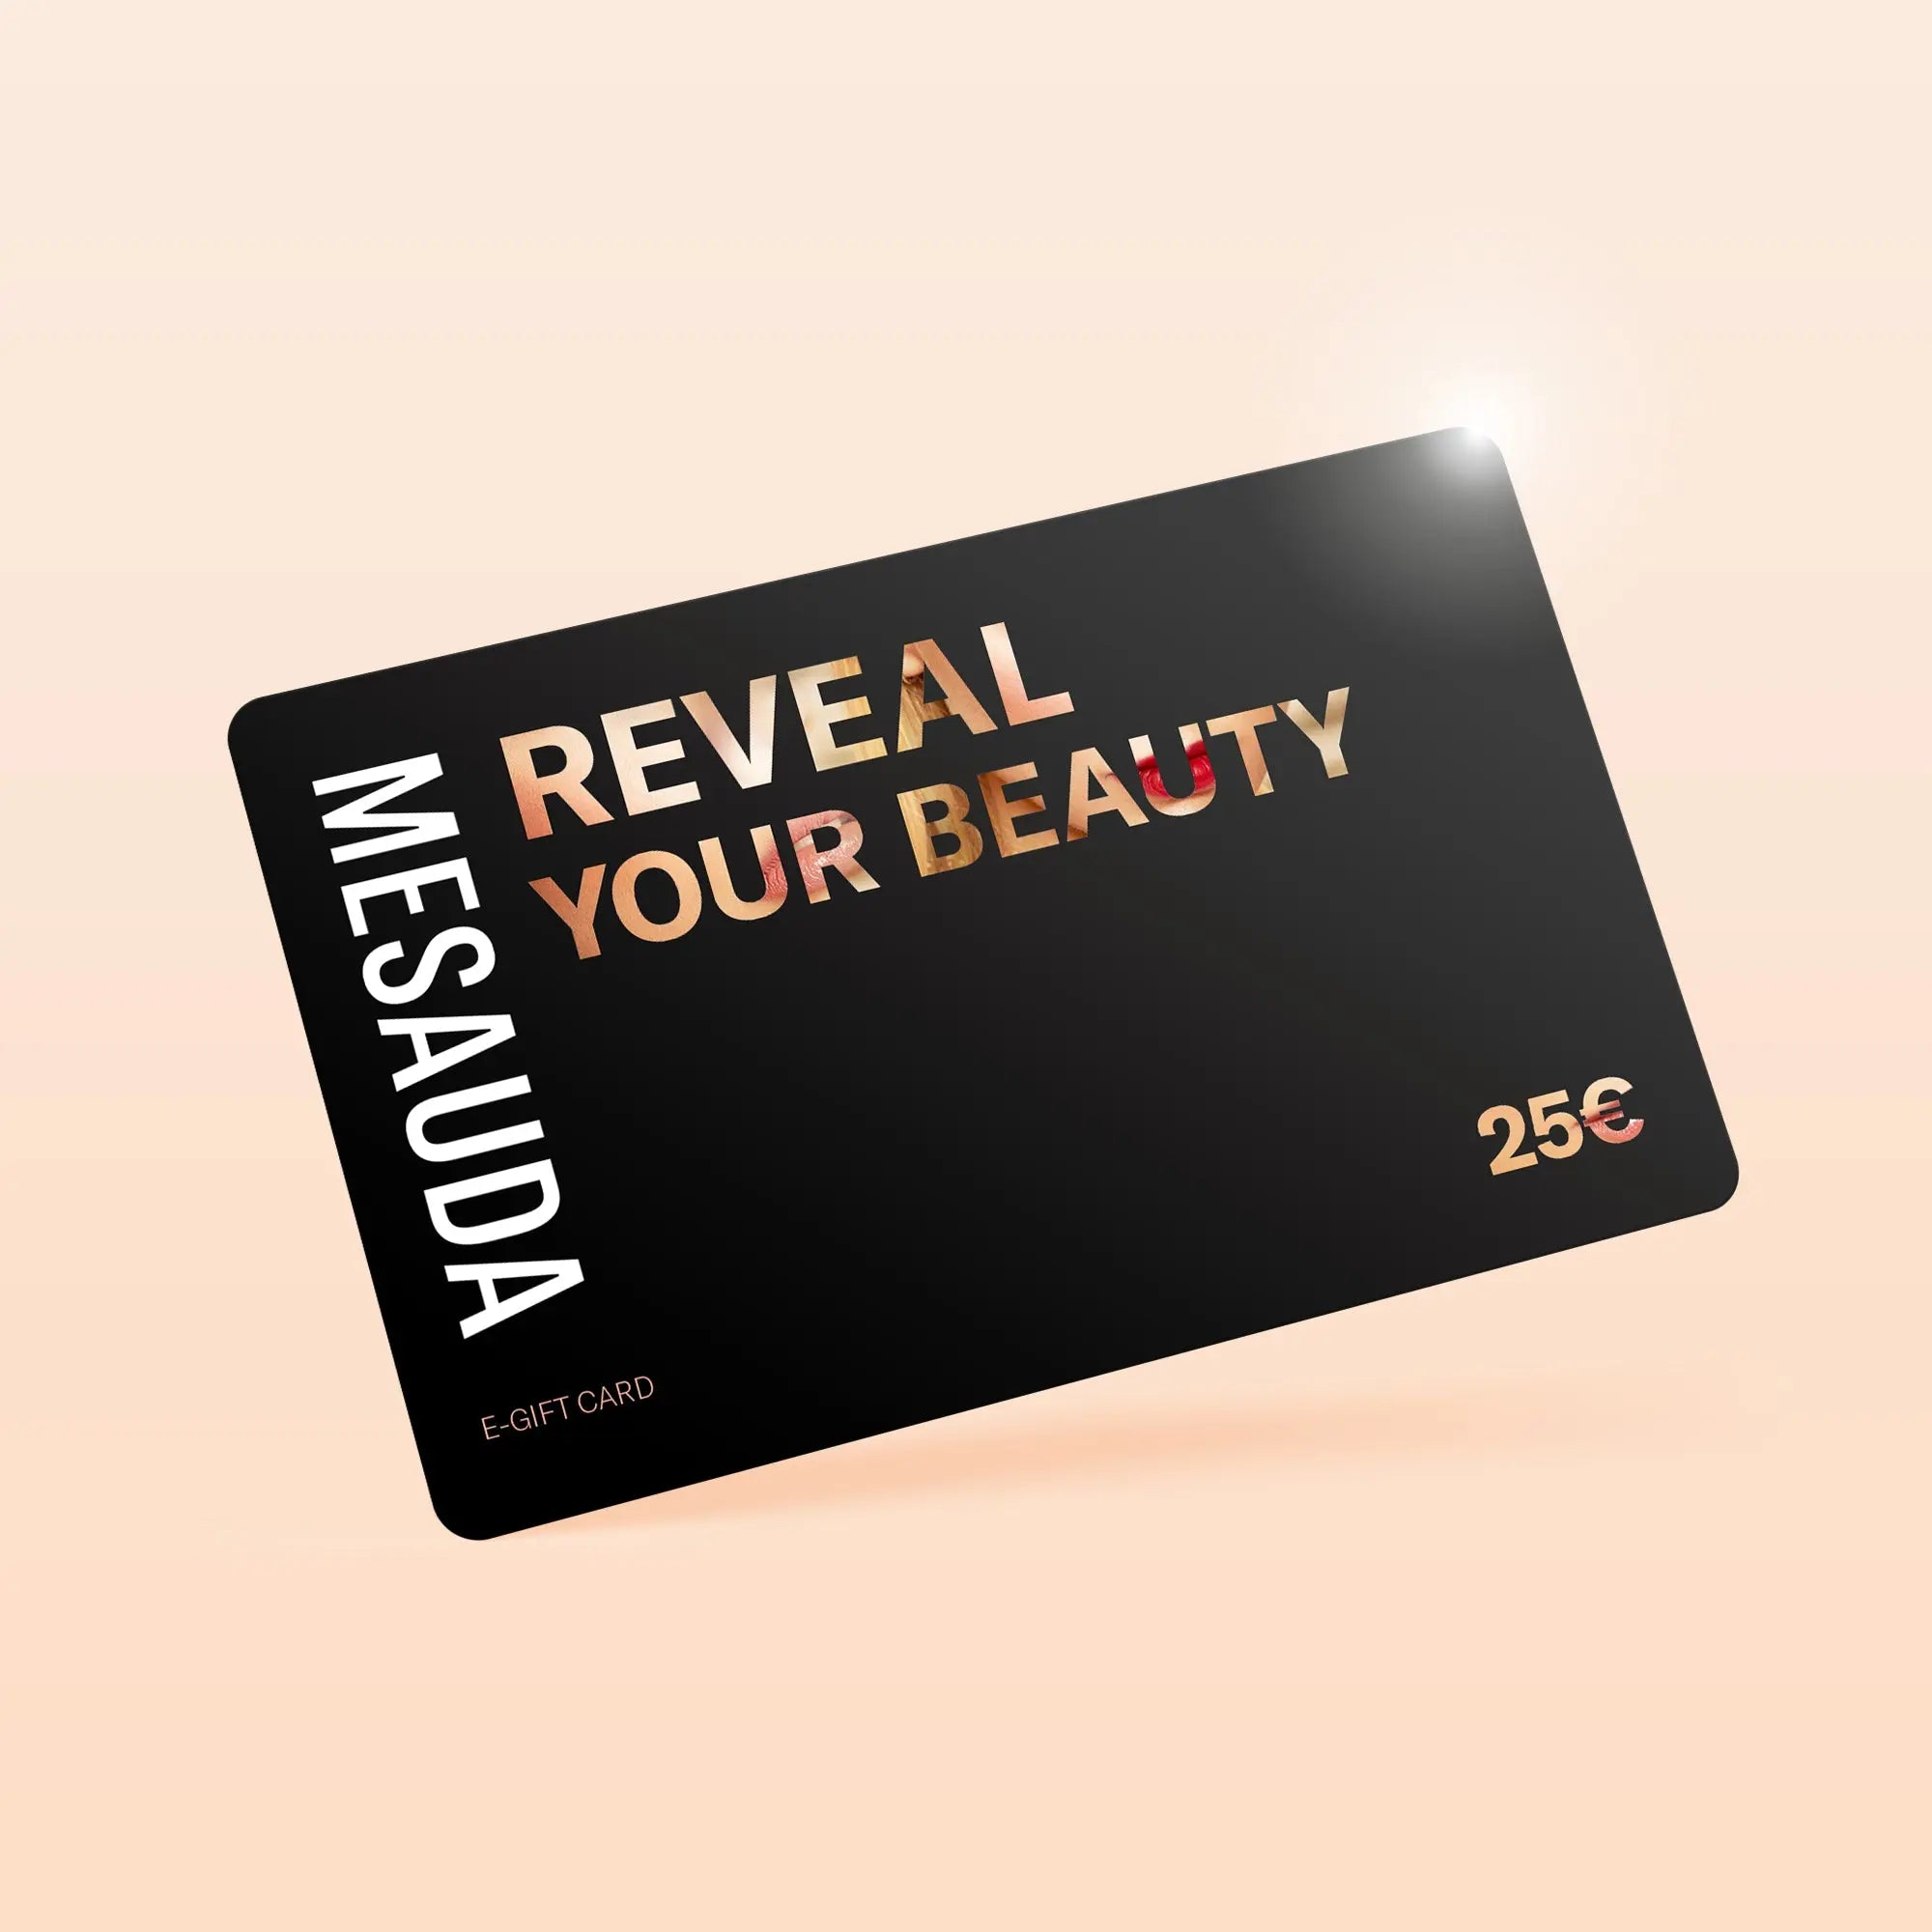 MESAUDA E-GIFT CARD Gift Card Virtuale